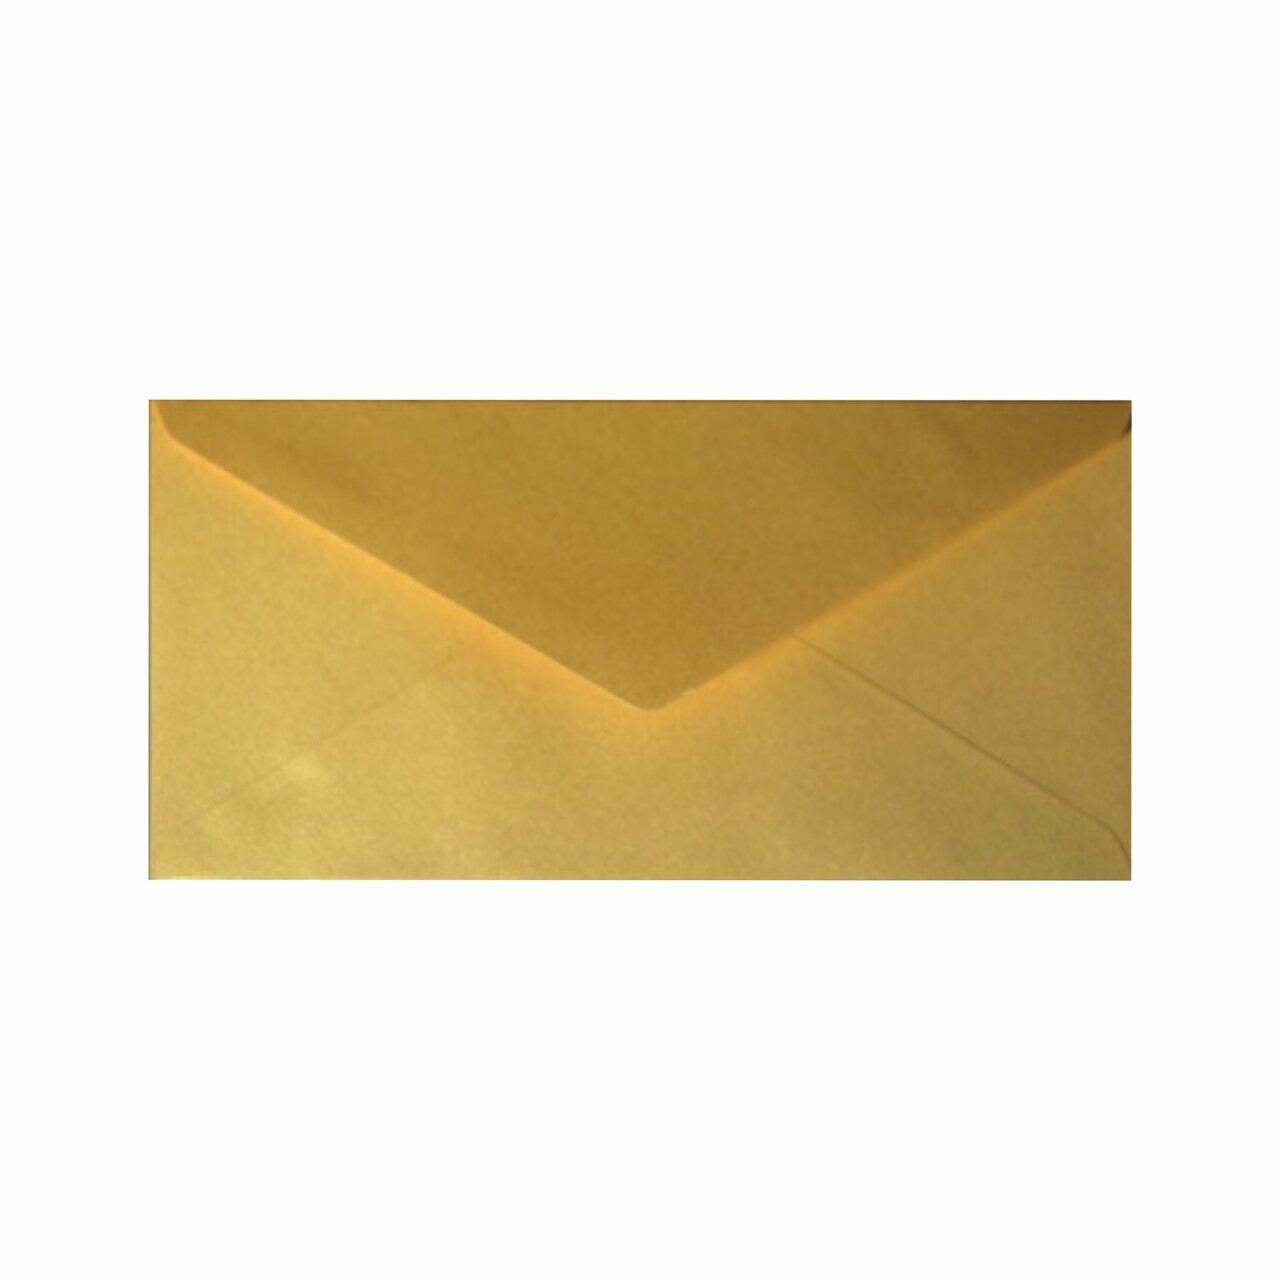 Varken Offer tij Envelop 110x220 mm DL metallic super gold - PPapier